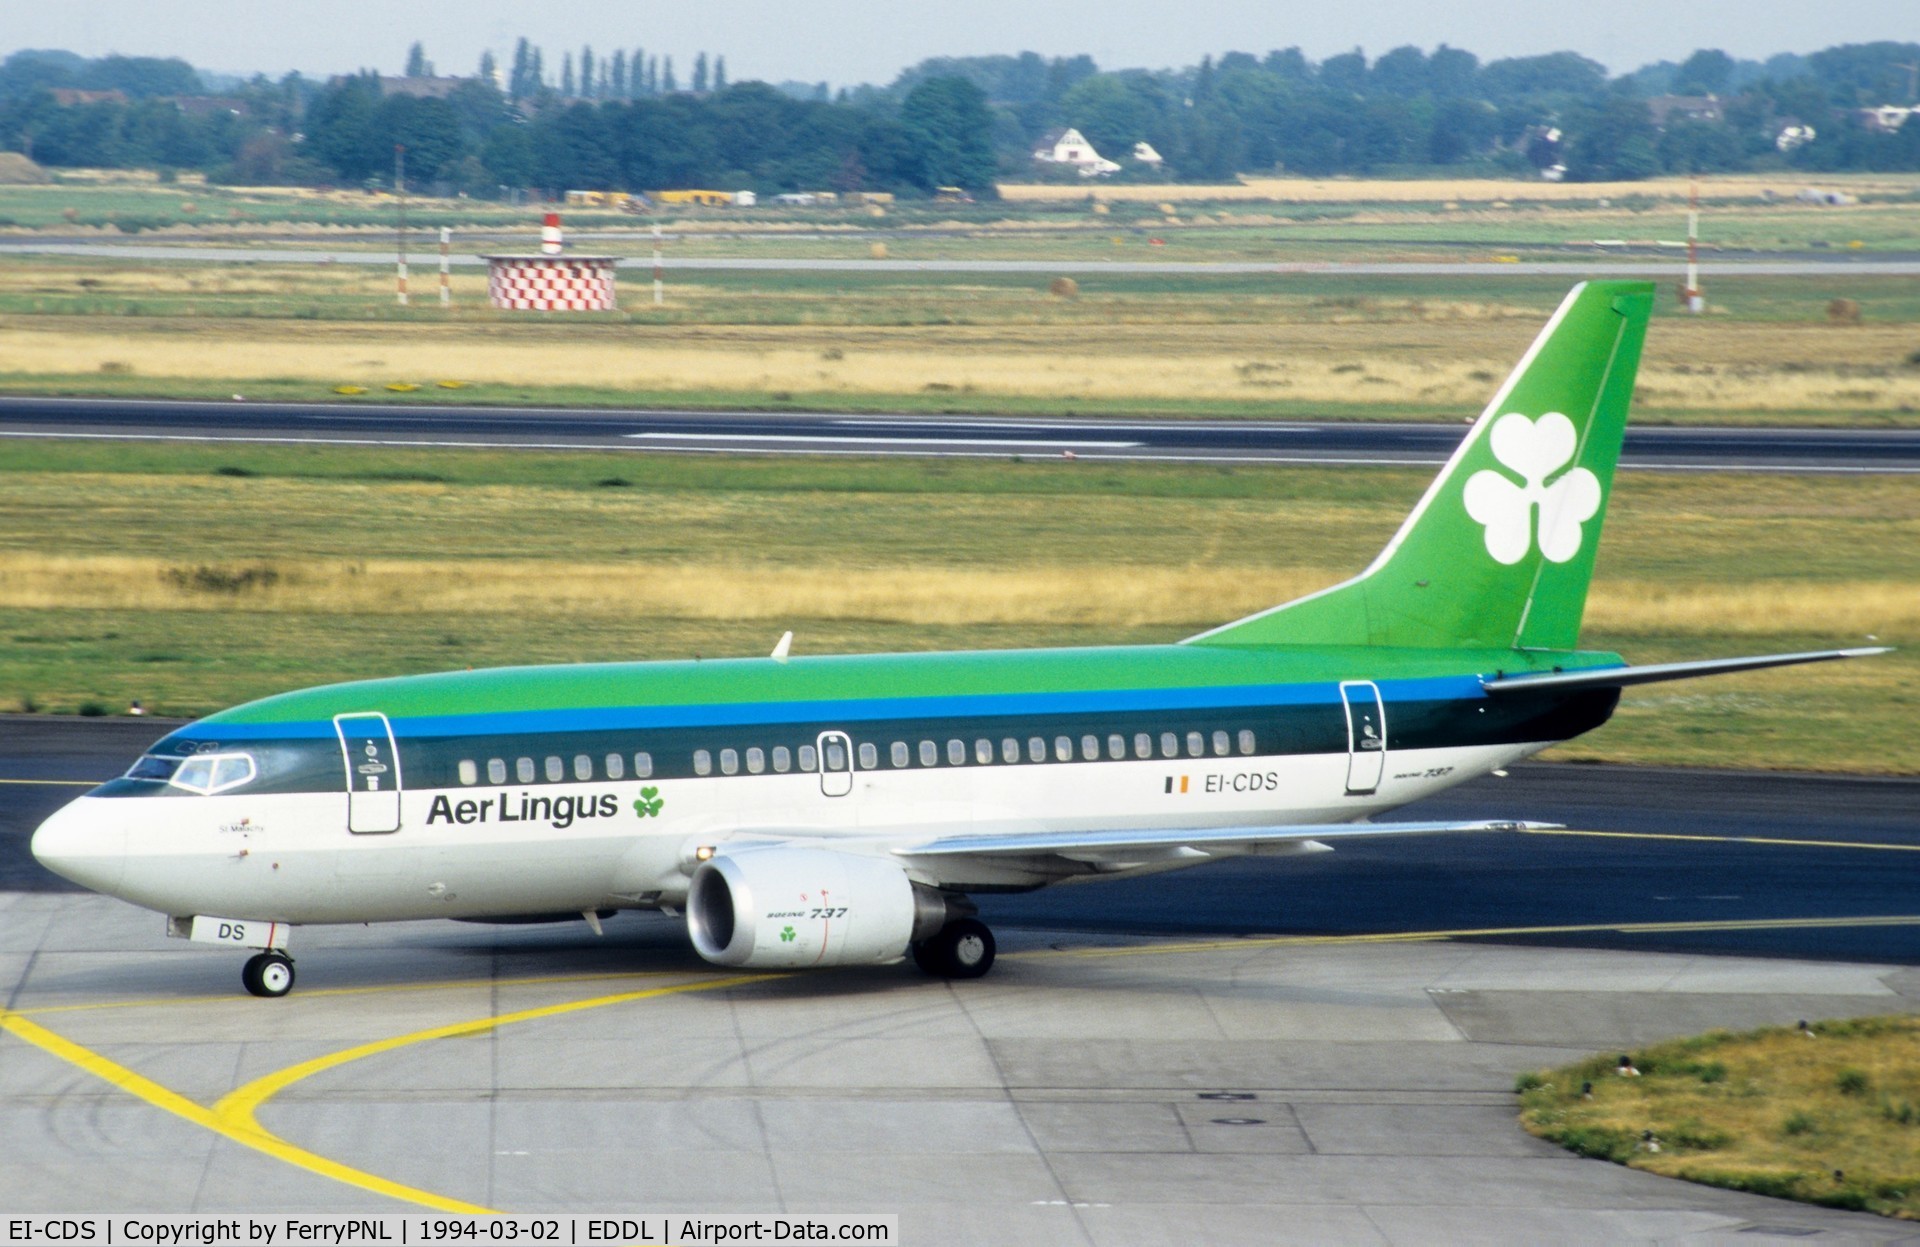 EI-CDS, 1993 Boeing 737-548 C/N 26287, Aer Lingus B735 entering DUS terminal area